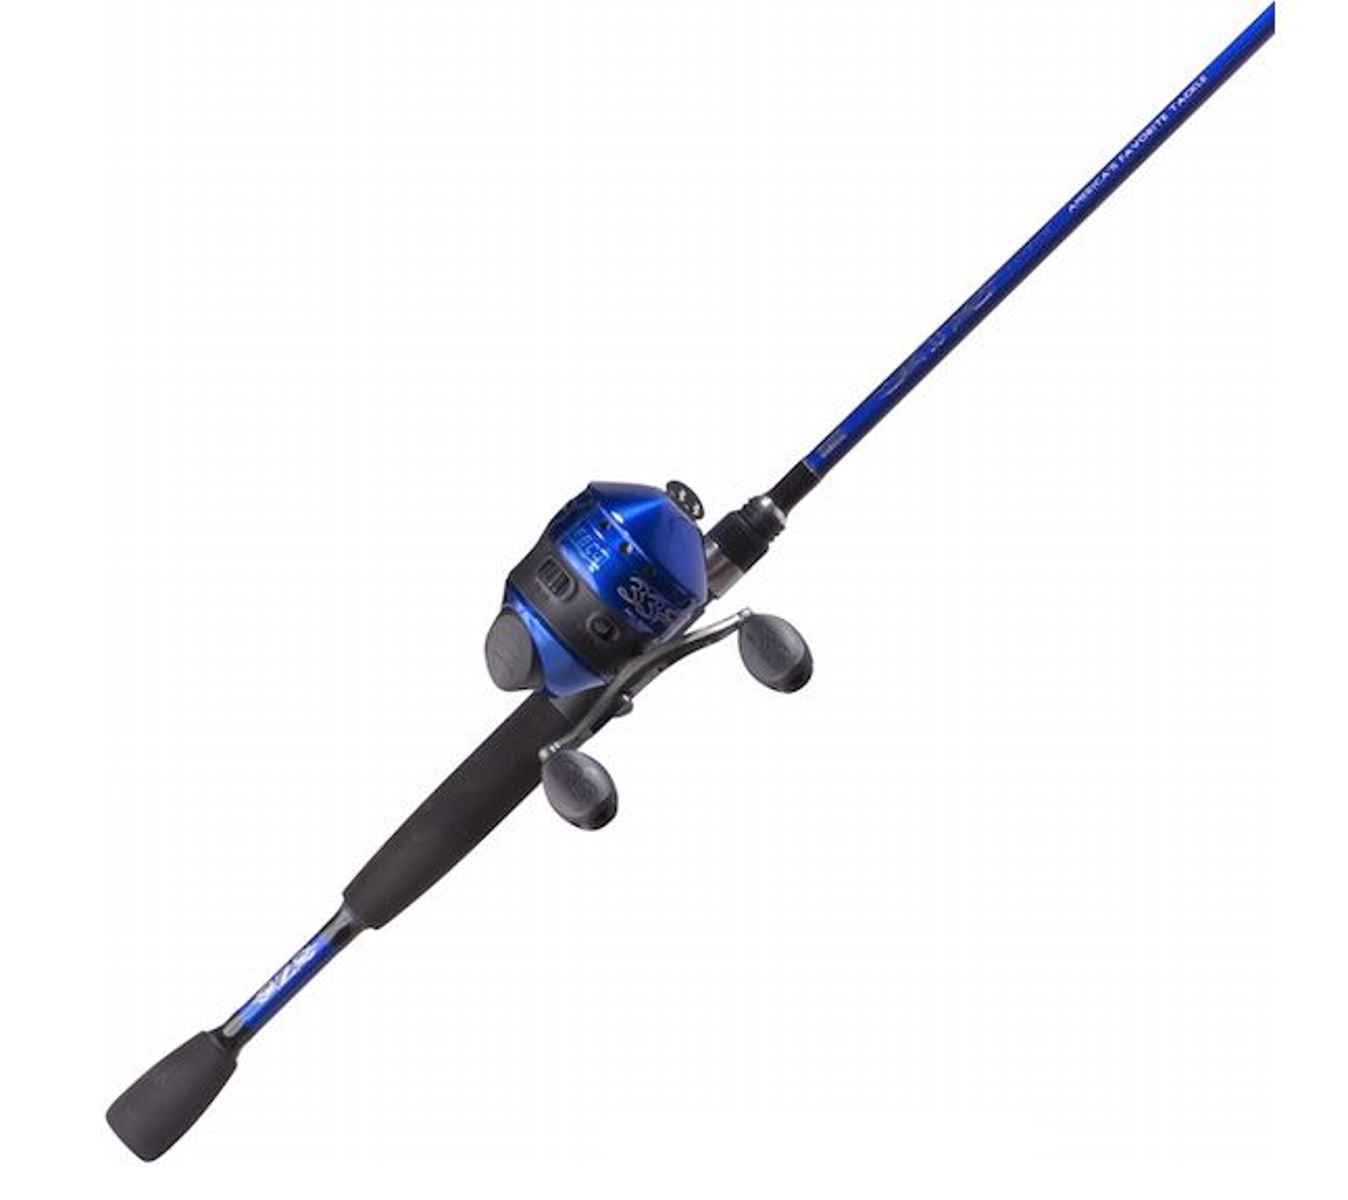 Zebco 33 Custom Z Spincast Reel and Fishing Rod Combo, 6-Foot 2-Piece  Fiberglass Rod with EVA Handle, QuickSet Anti-Reverse Fishing Reel with  Bite Alert, Red 